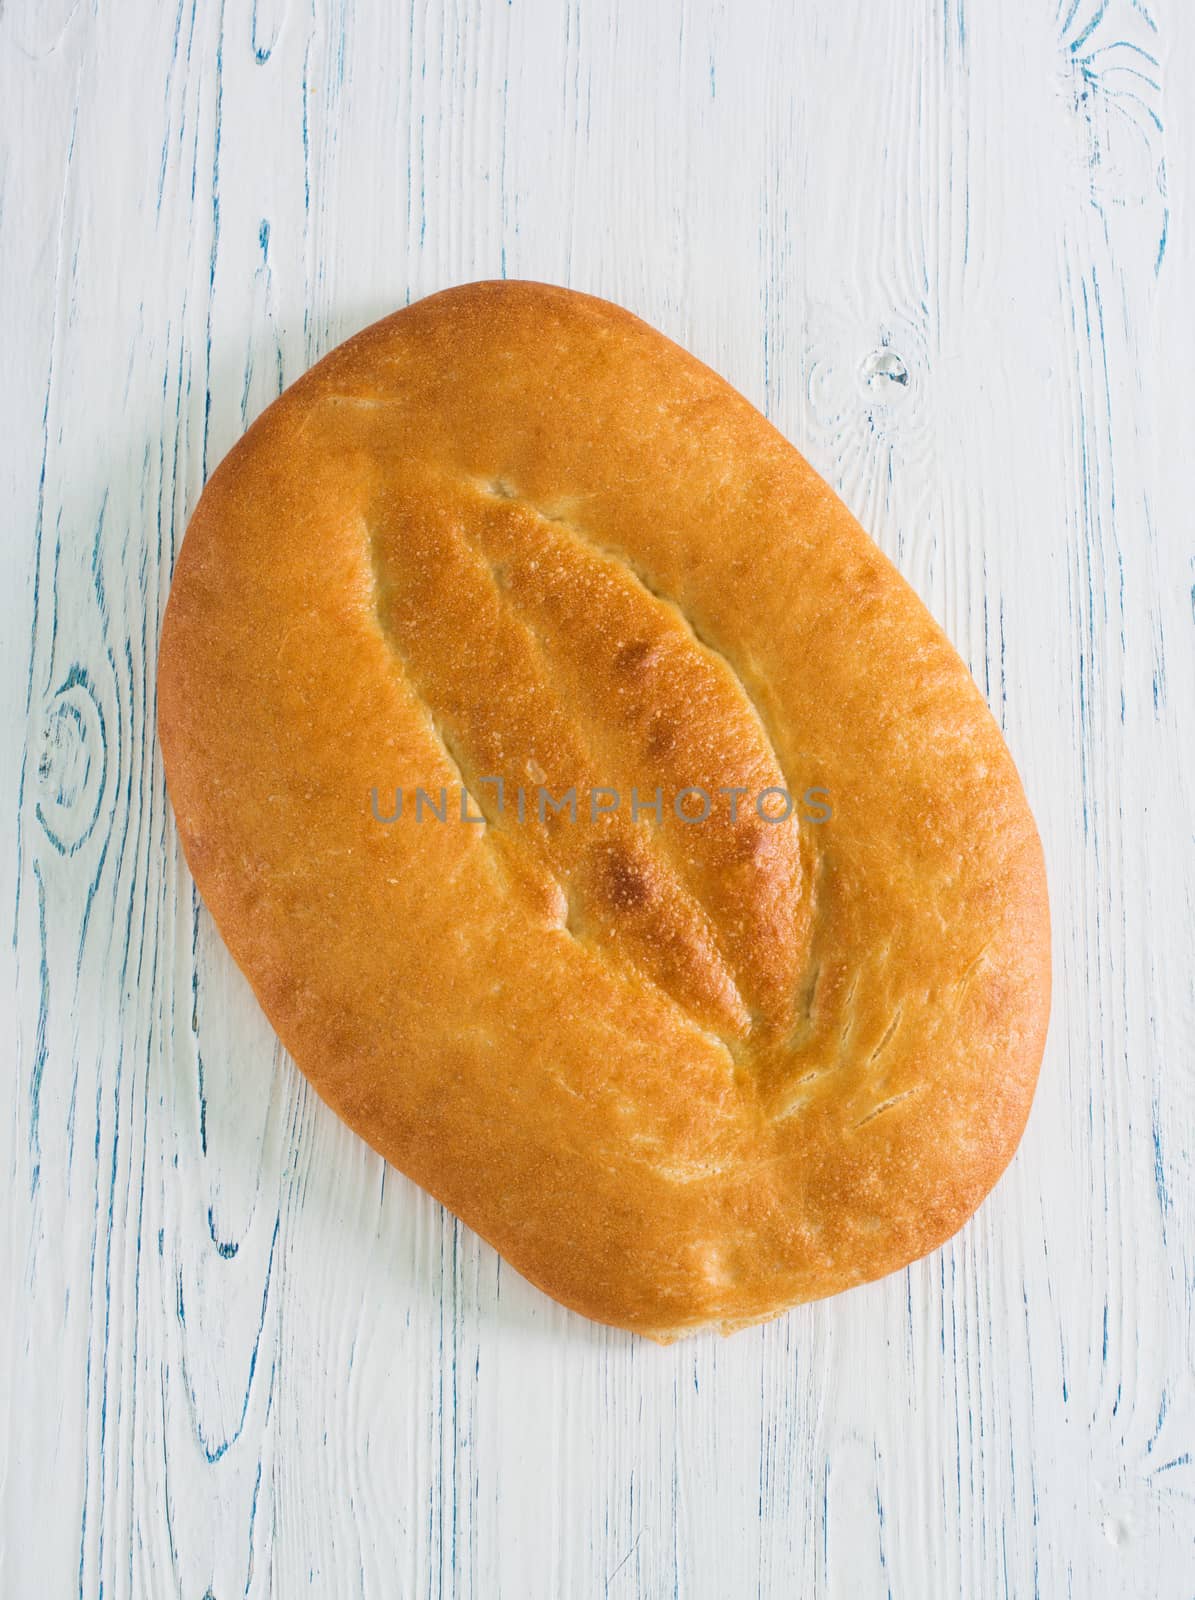 Whole wheat pita bread on wood table by kzen